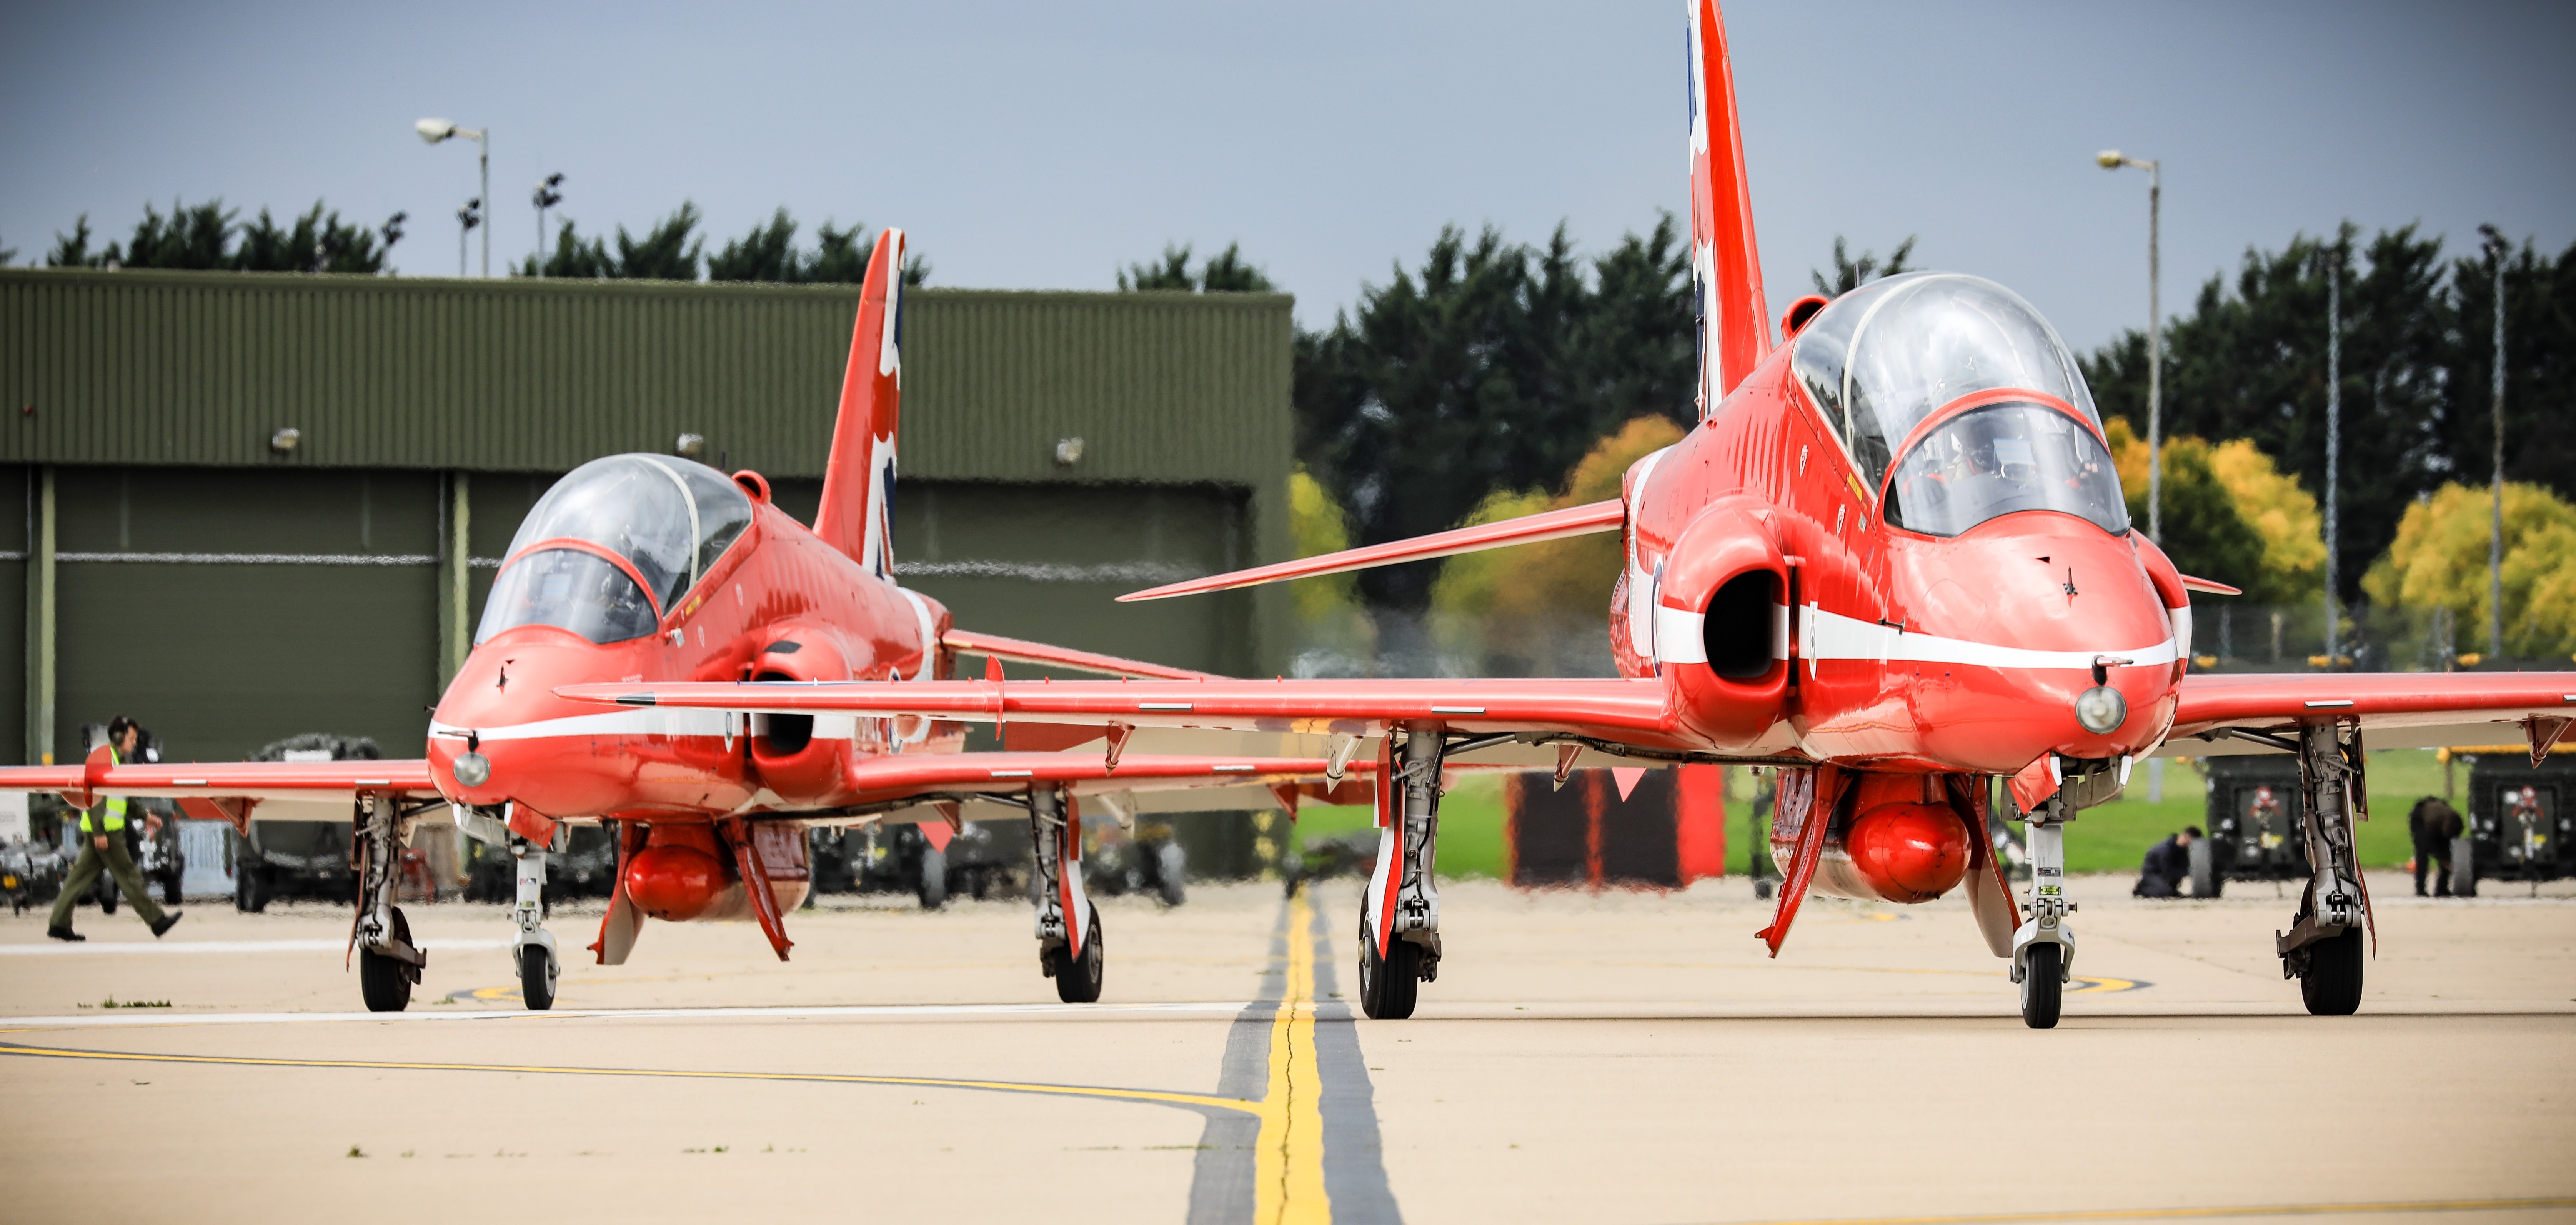 The Red Arrows at RAF Waddington.